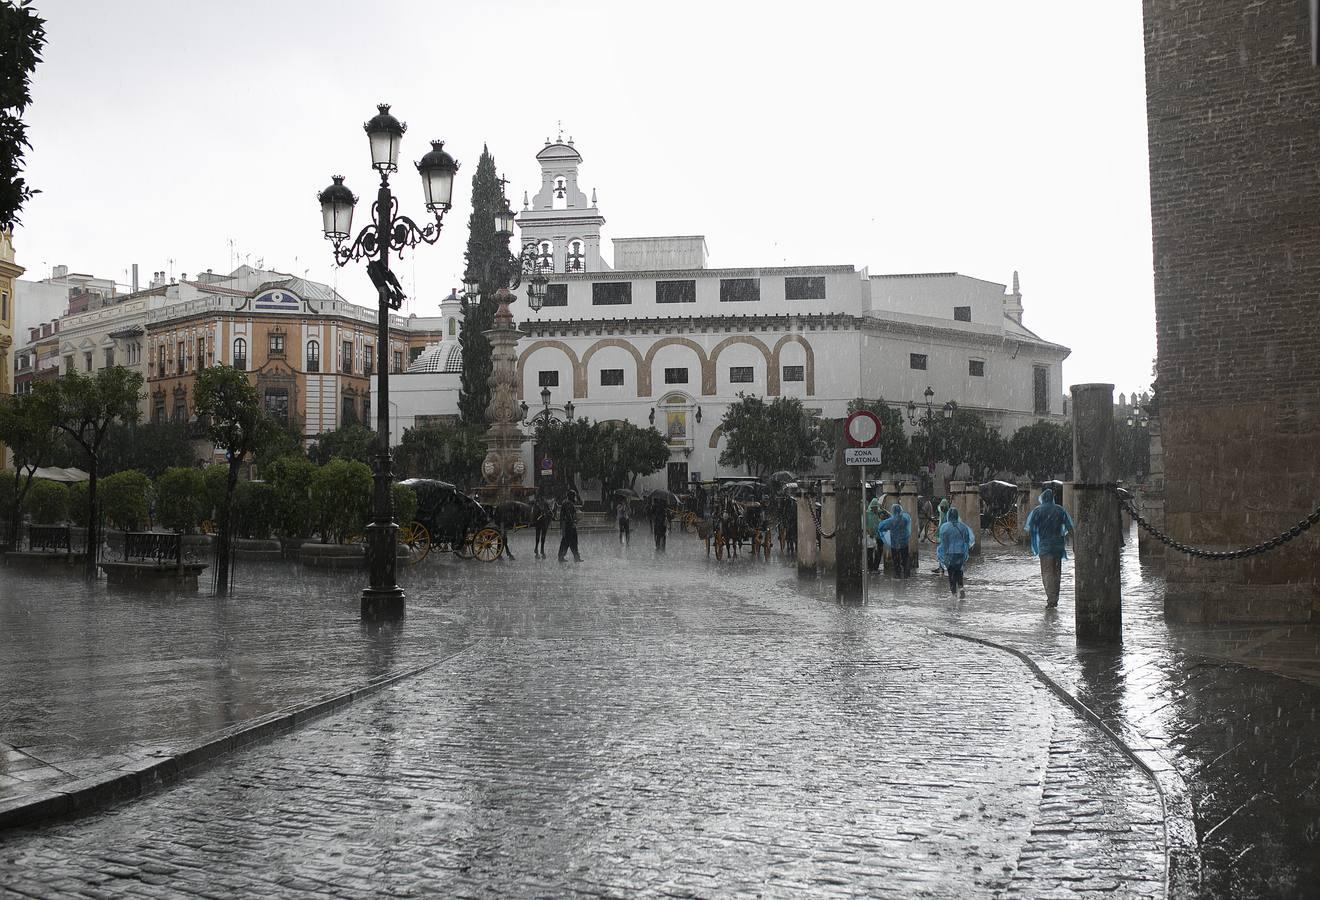 La lluvia inaugura el otoño en Sevilla